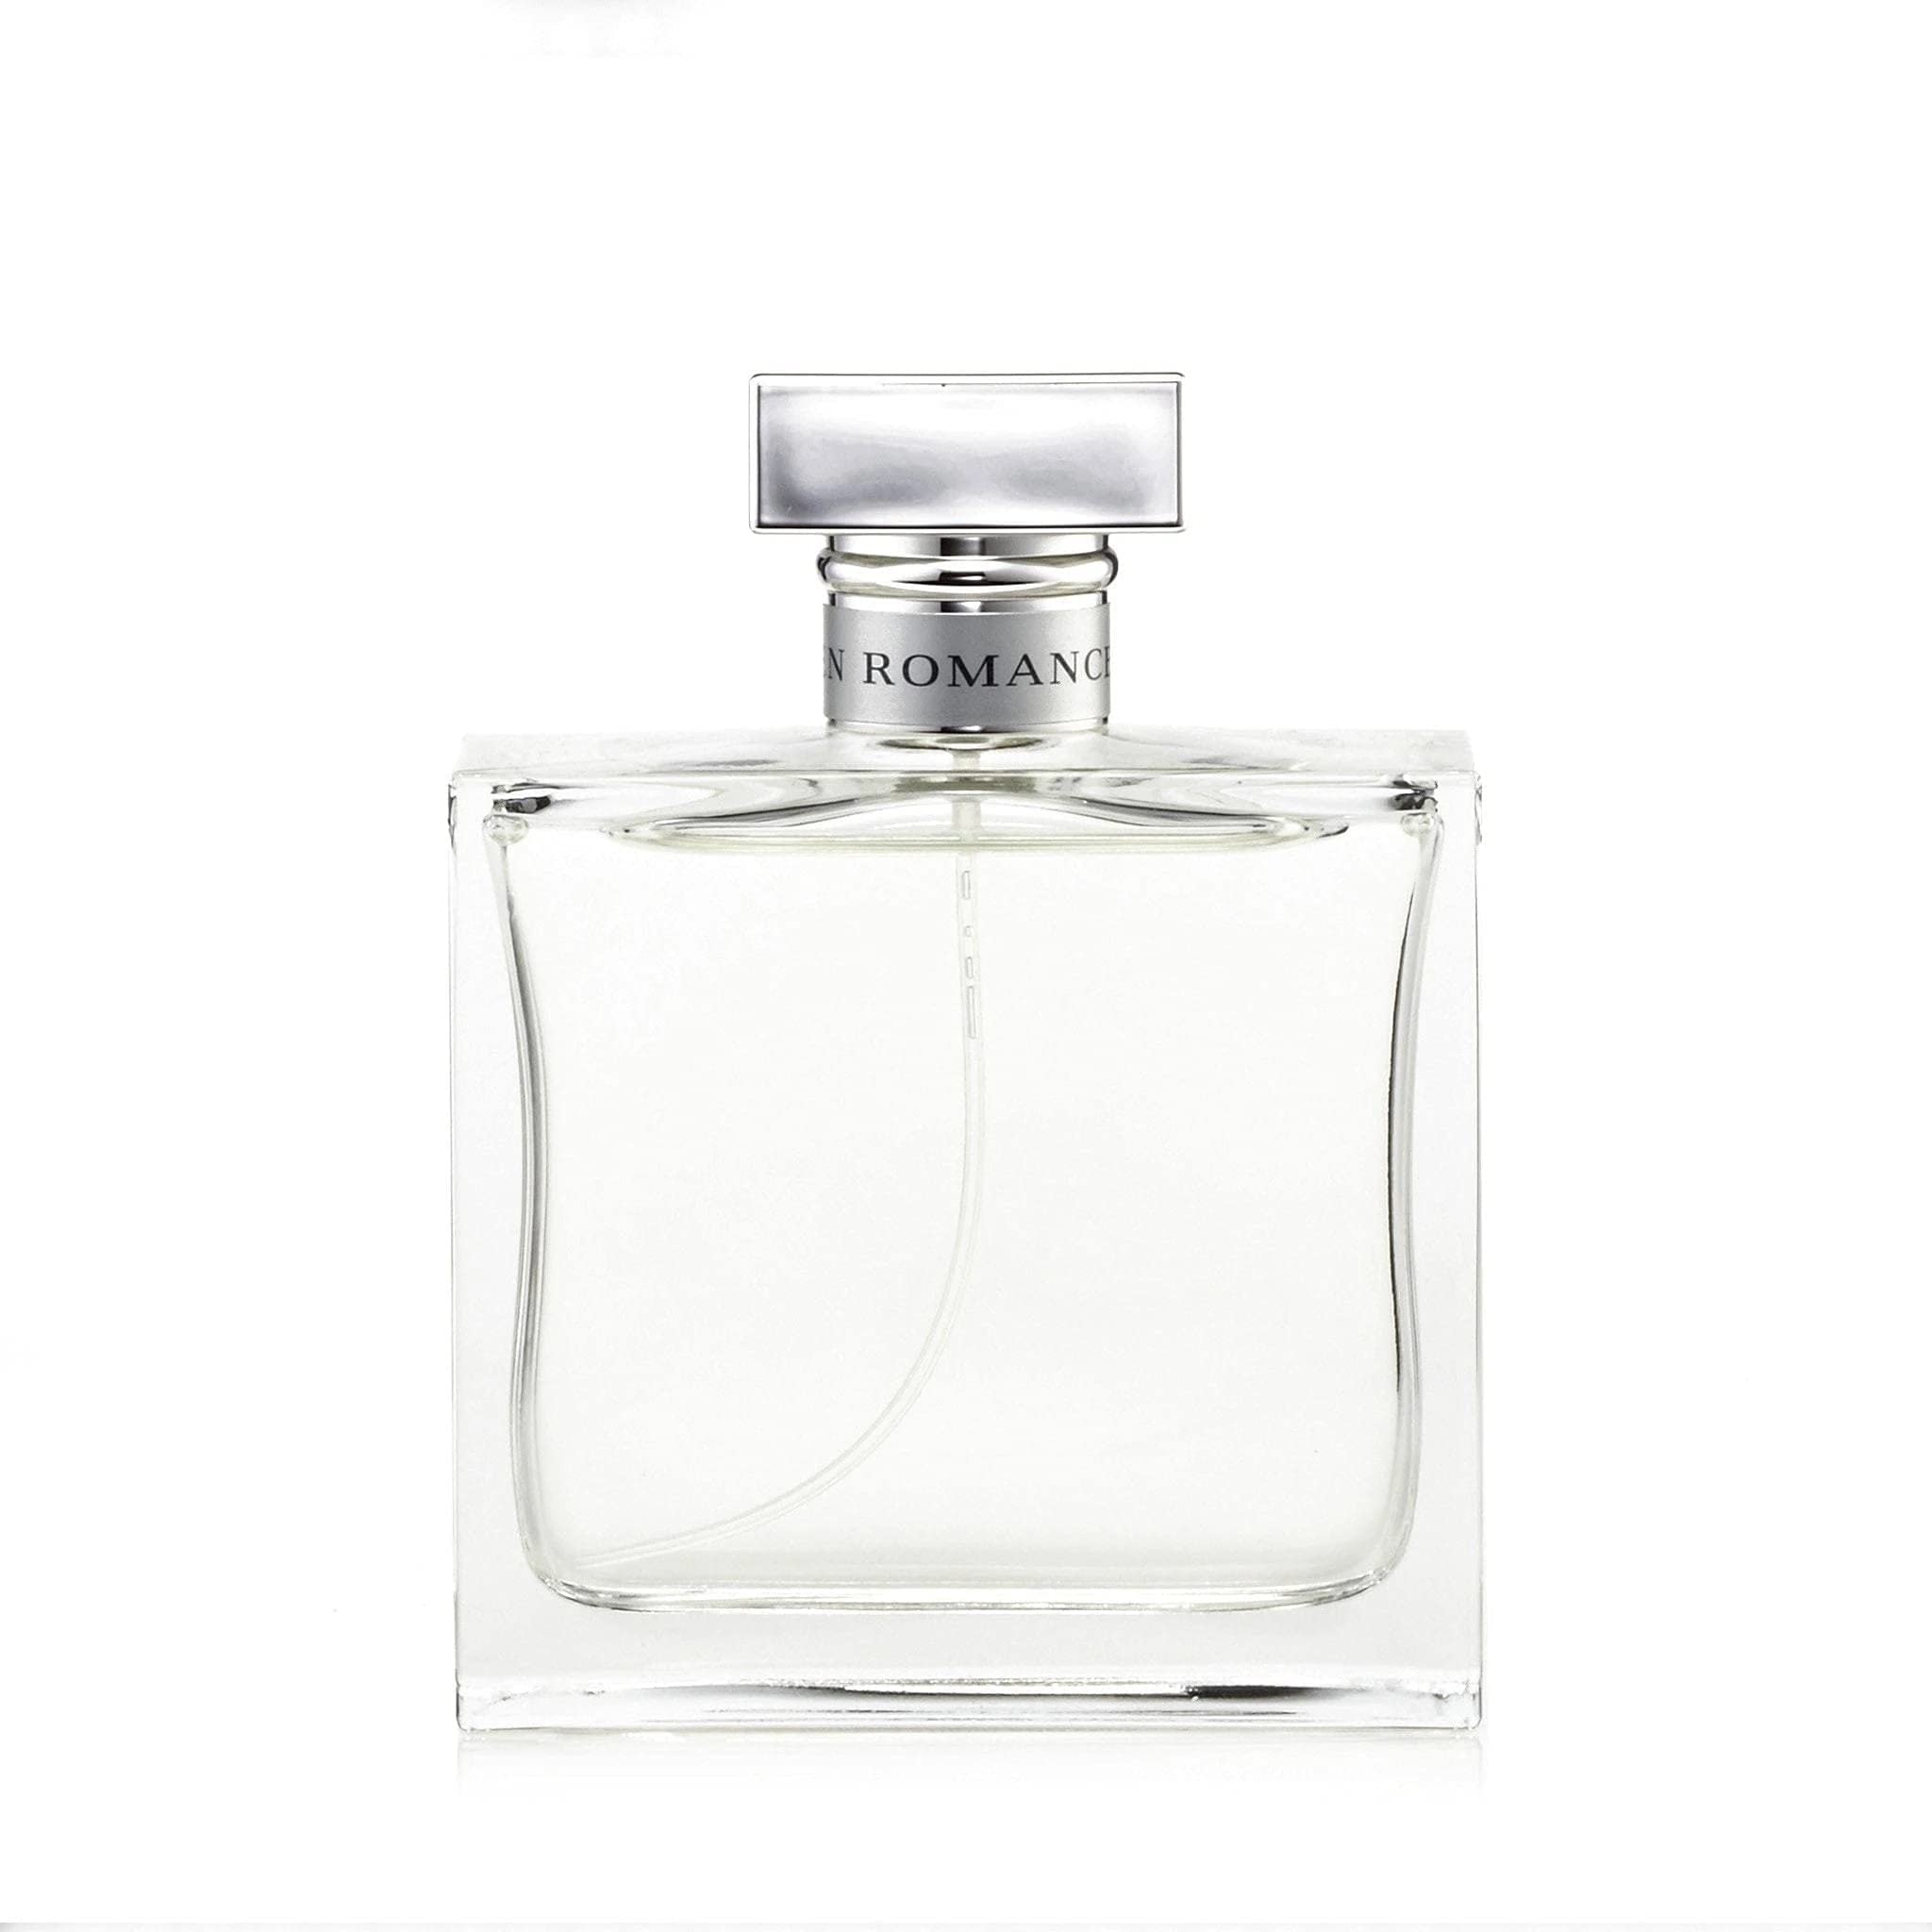 Mua Ralph Lauren Romance Eau De Perfume Spray for Women,  Ounce trên  Amazon Mỹ chính hãng 2023 | Giaonhan247